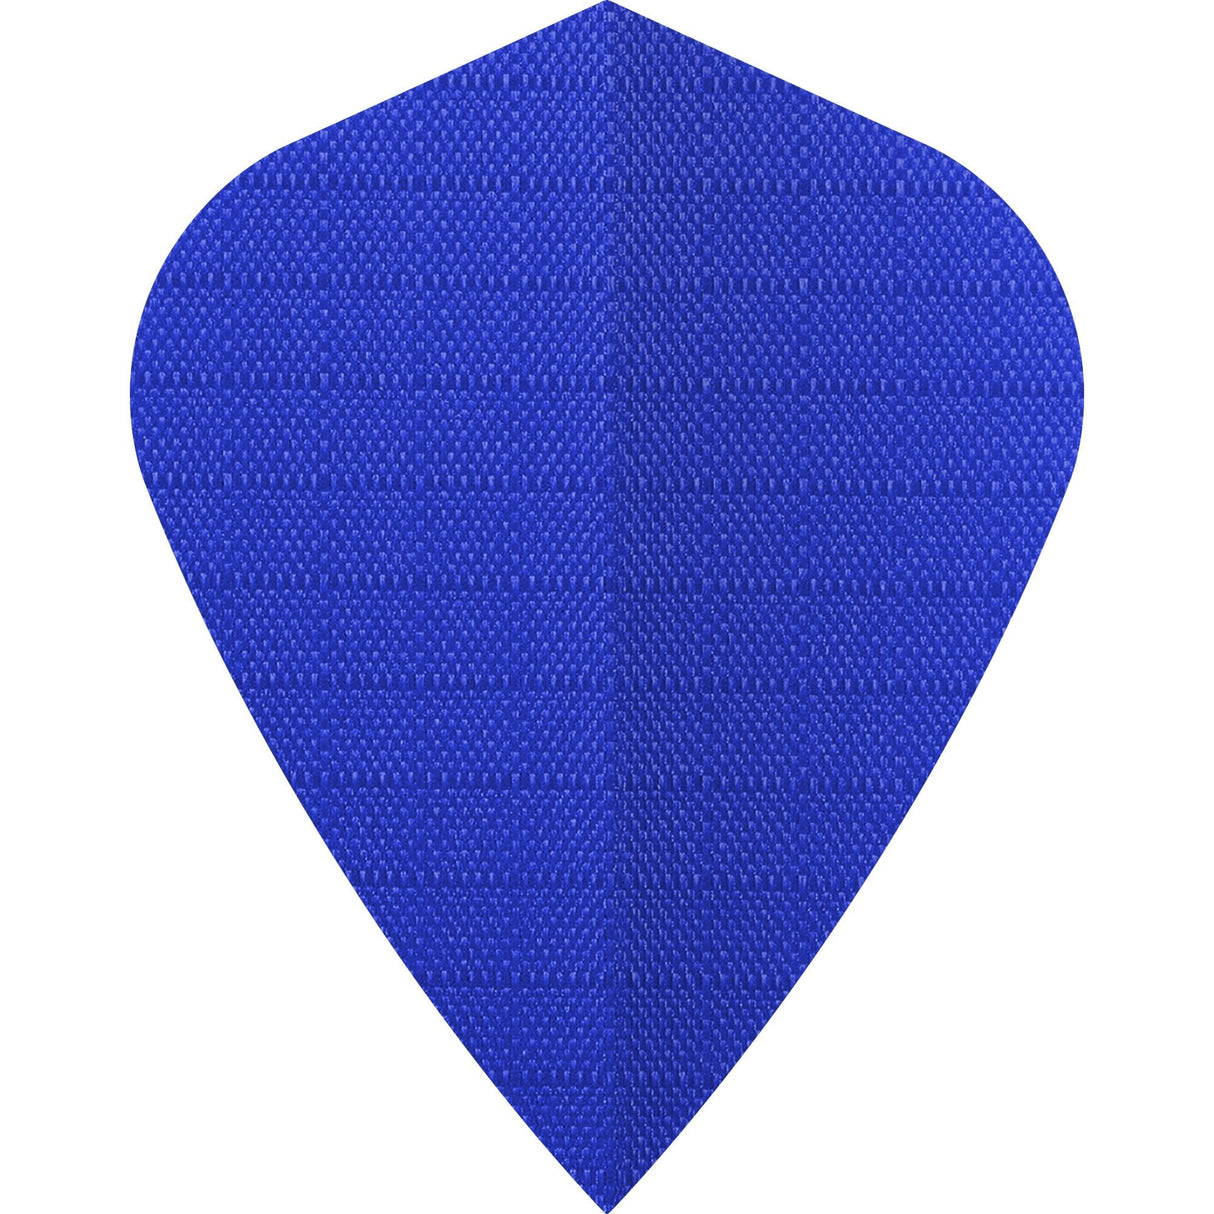 Designa Dart Flights - Fabric Rip Stop Nylon - Longlife - Kite Blue